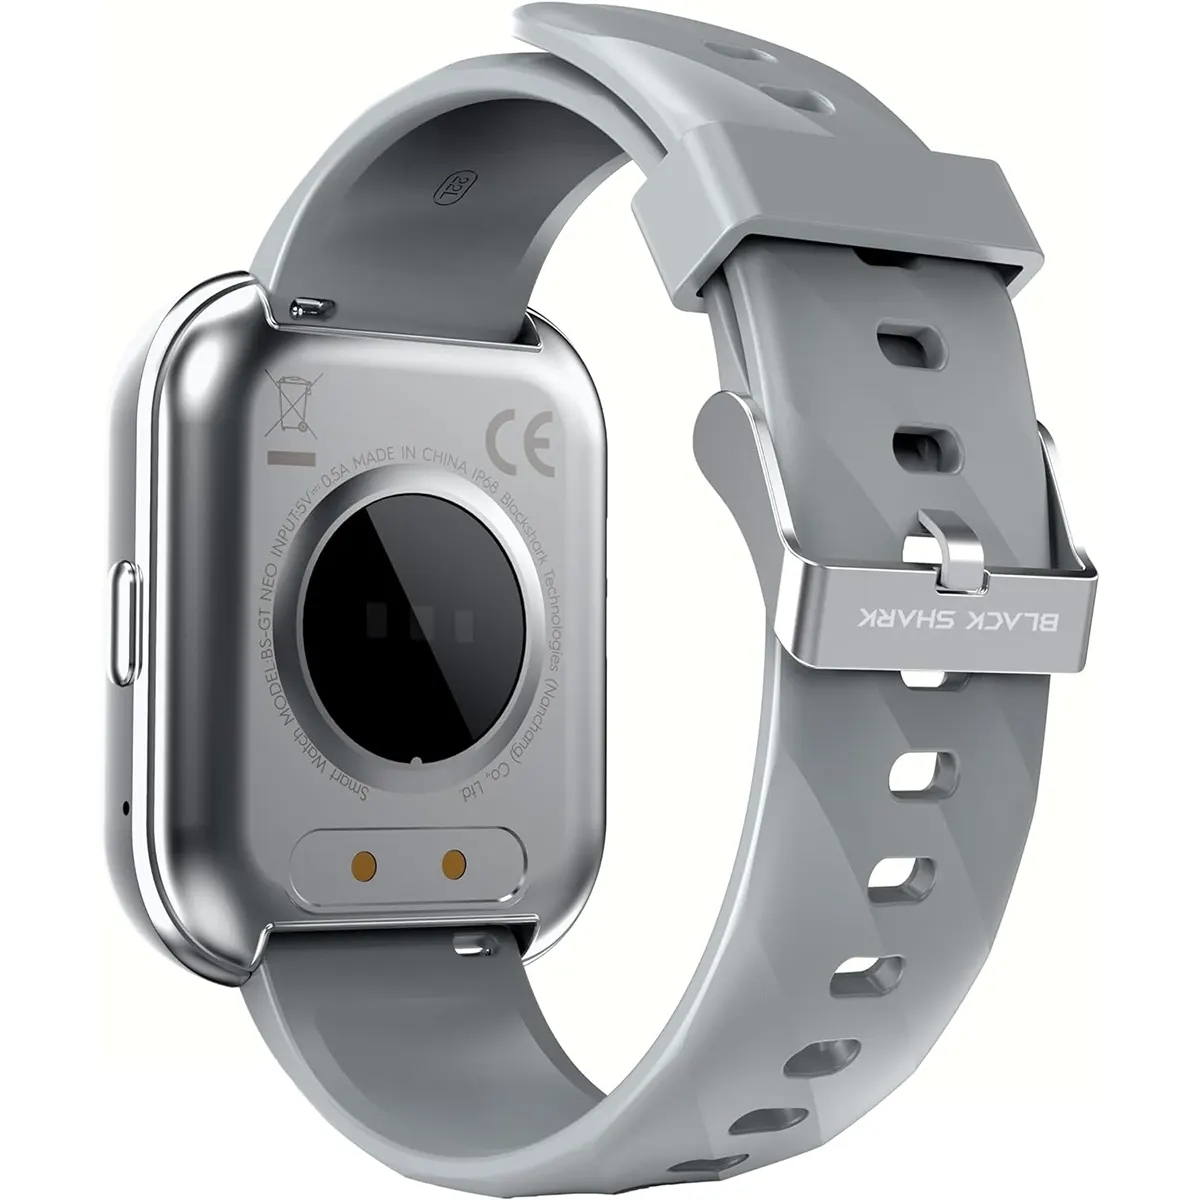 ساعت هوشمند بلک شارک Black Shark GT Neo Smart Watch رنگ نقره ای (4)